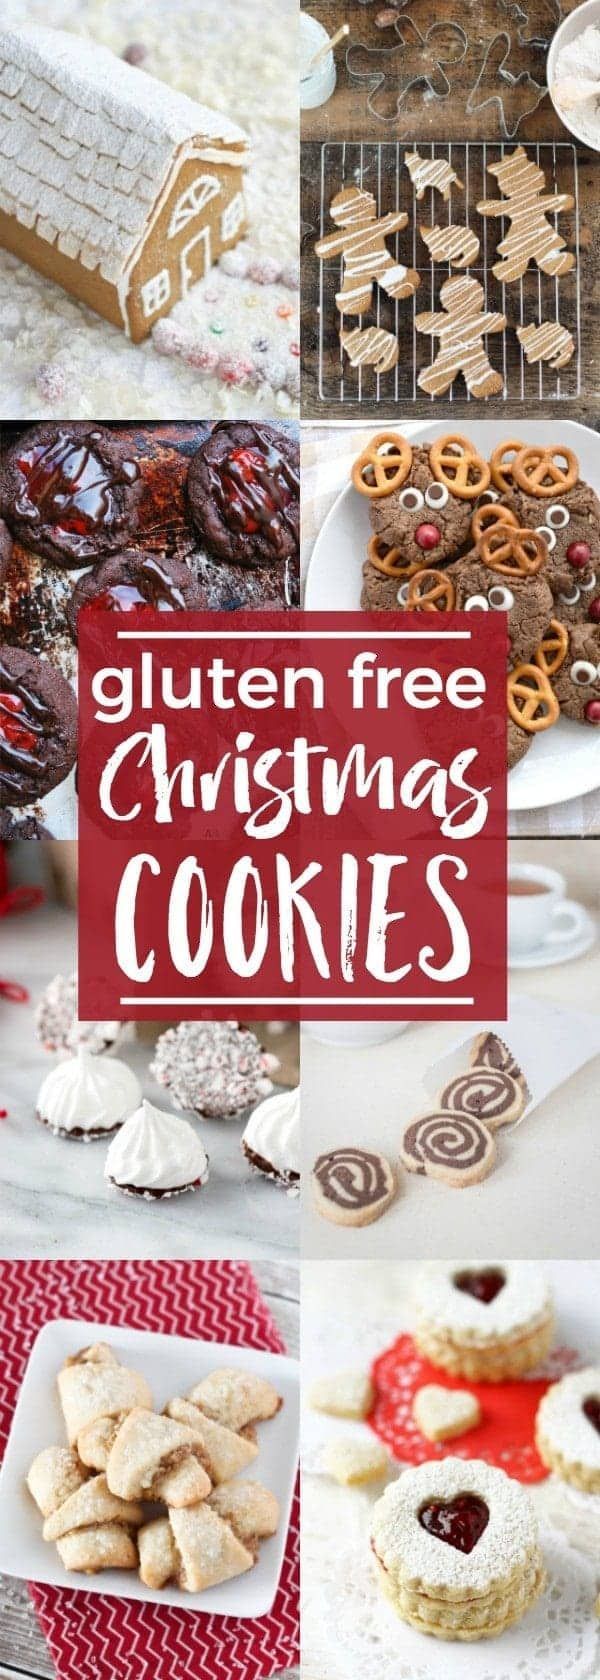 13 holiday Christmas gluten free ideas